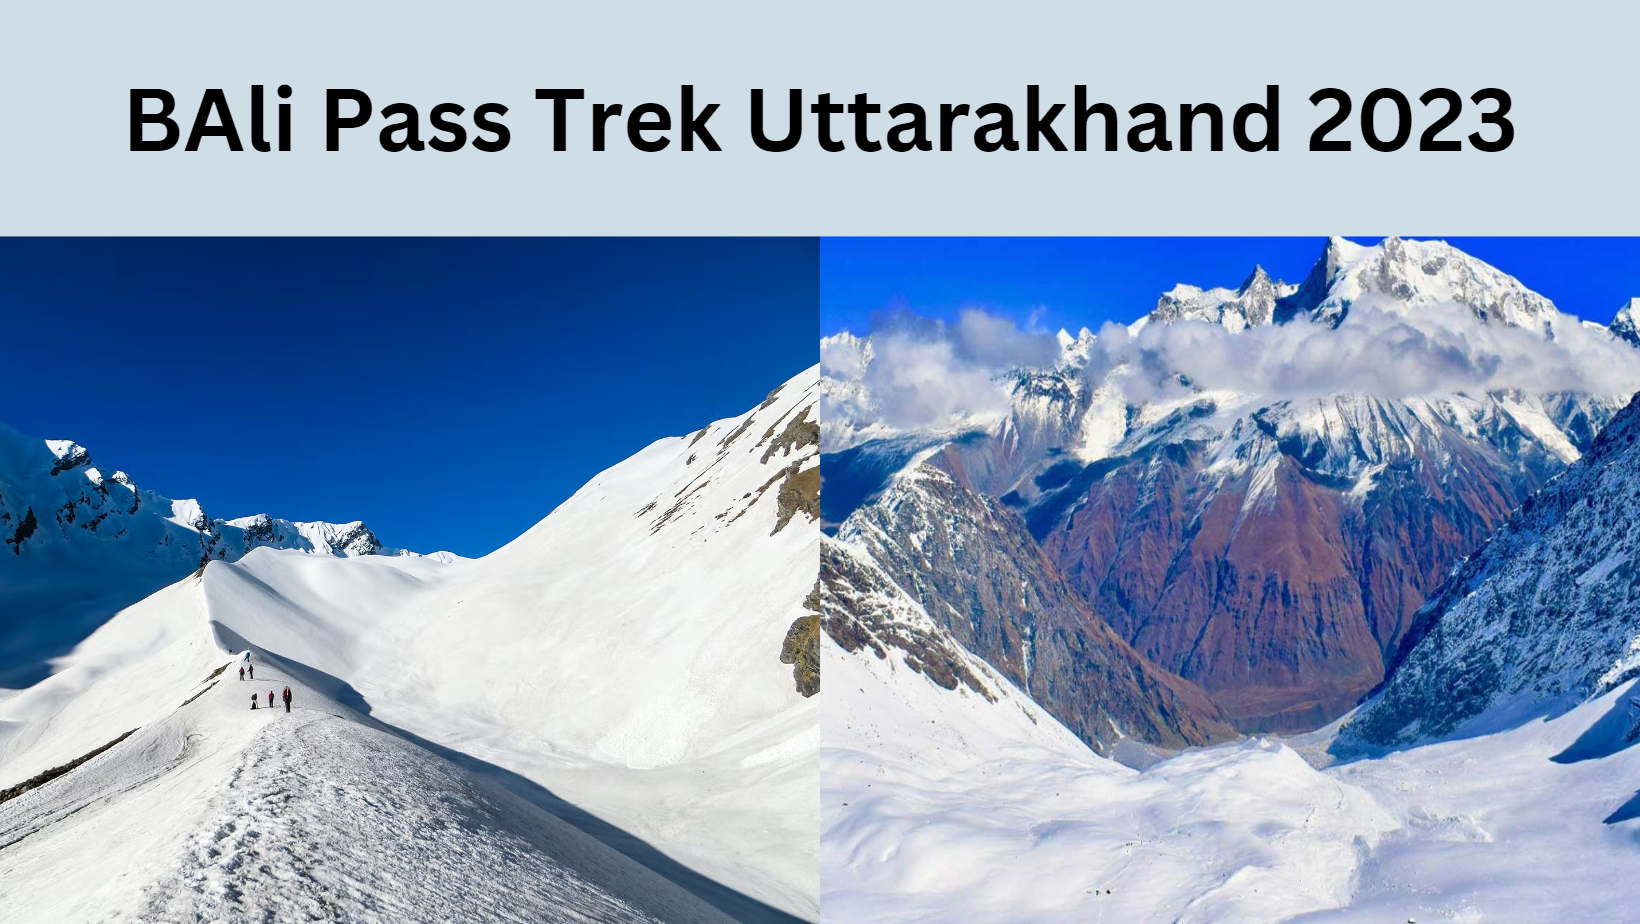 Bali Pass Trek Uttarakhand 2023